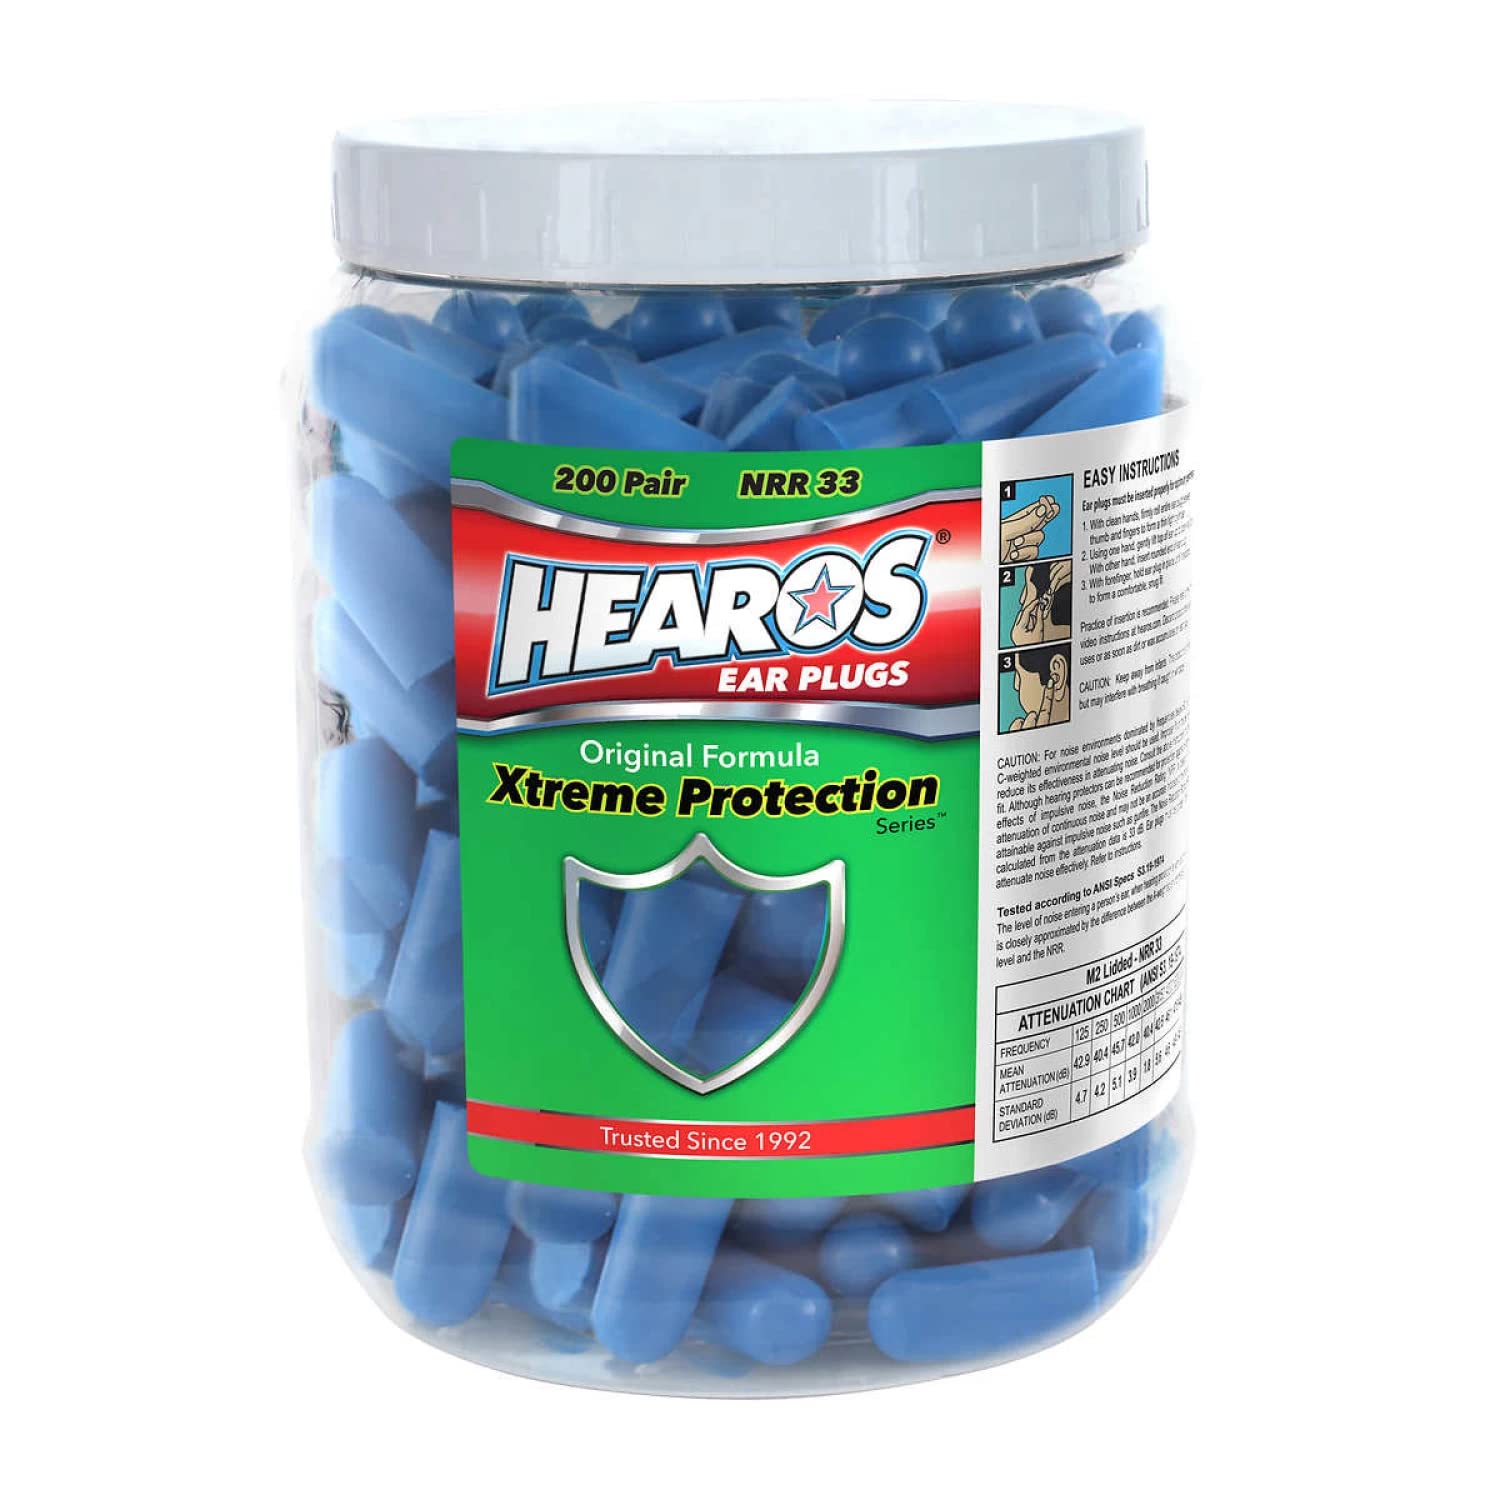 HEAROS Xtreme Protection Foam Ear Plugs, 33dB NRR 33, 200 Pairs (Blue)